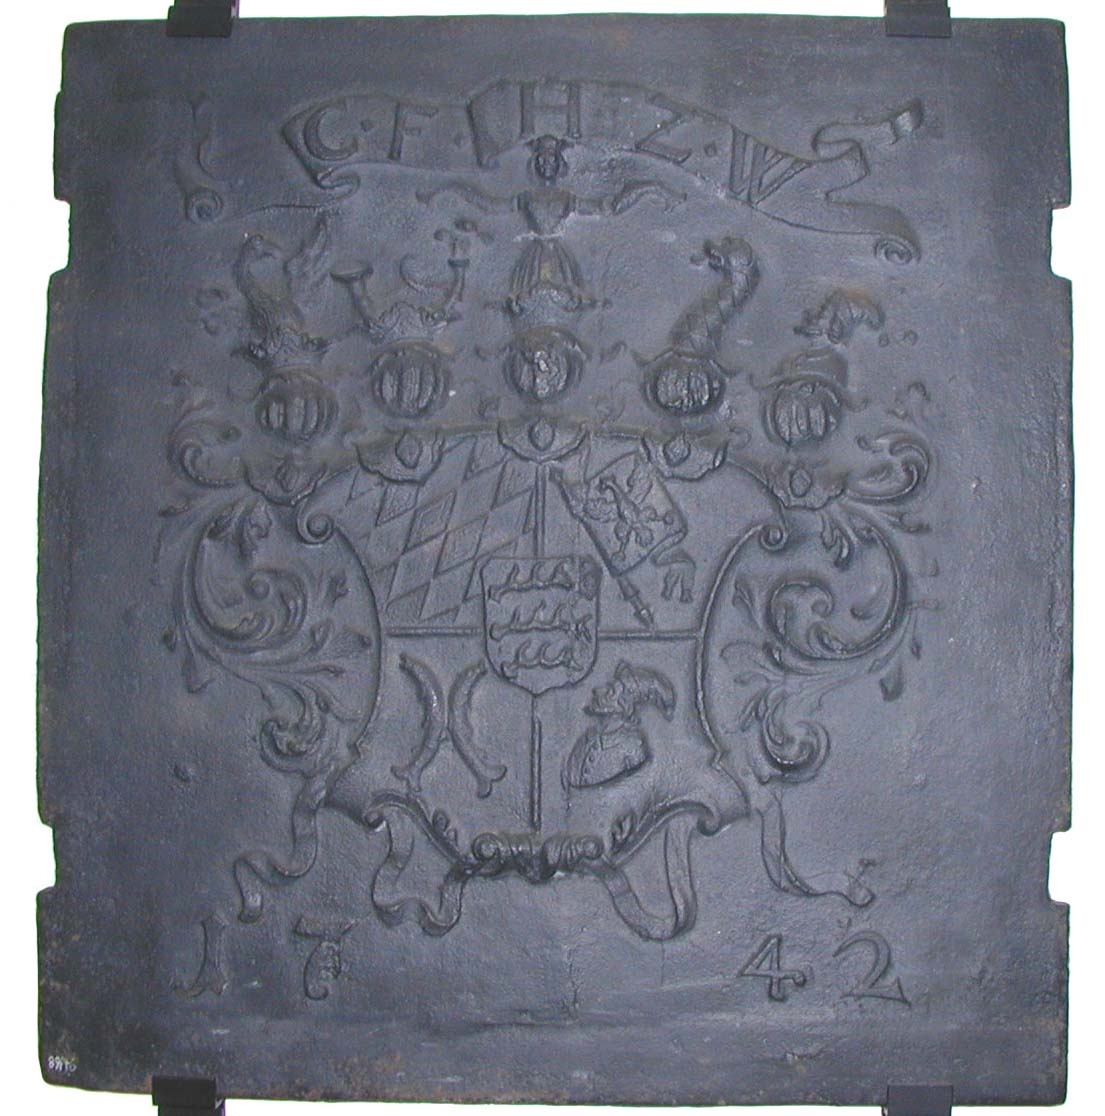 Ofenplatte mit dem Wappen des Herzogtums Württemberg (Heimatmuseum Altes Rathaus Loßburg CC BY)